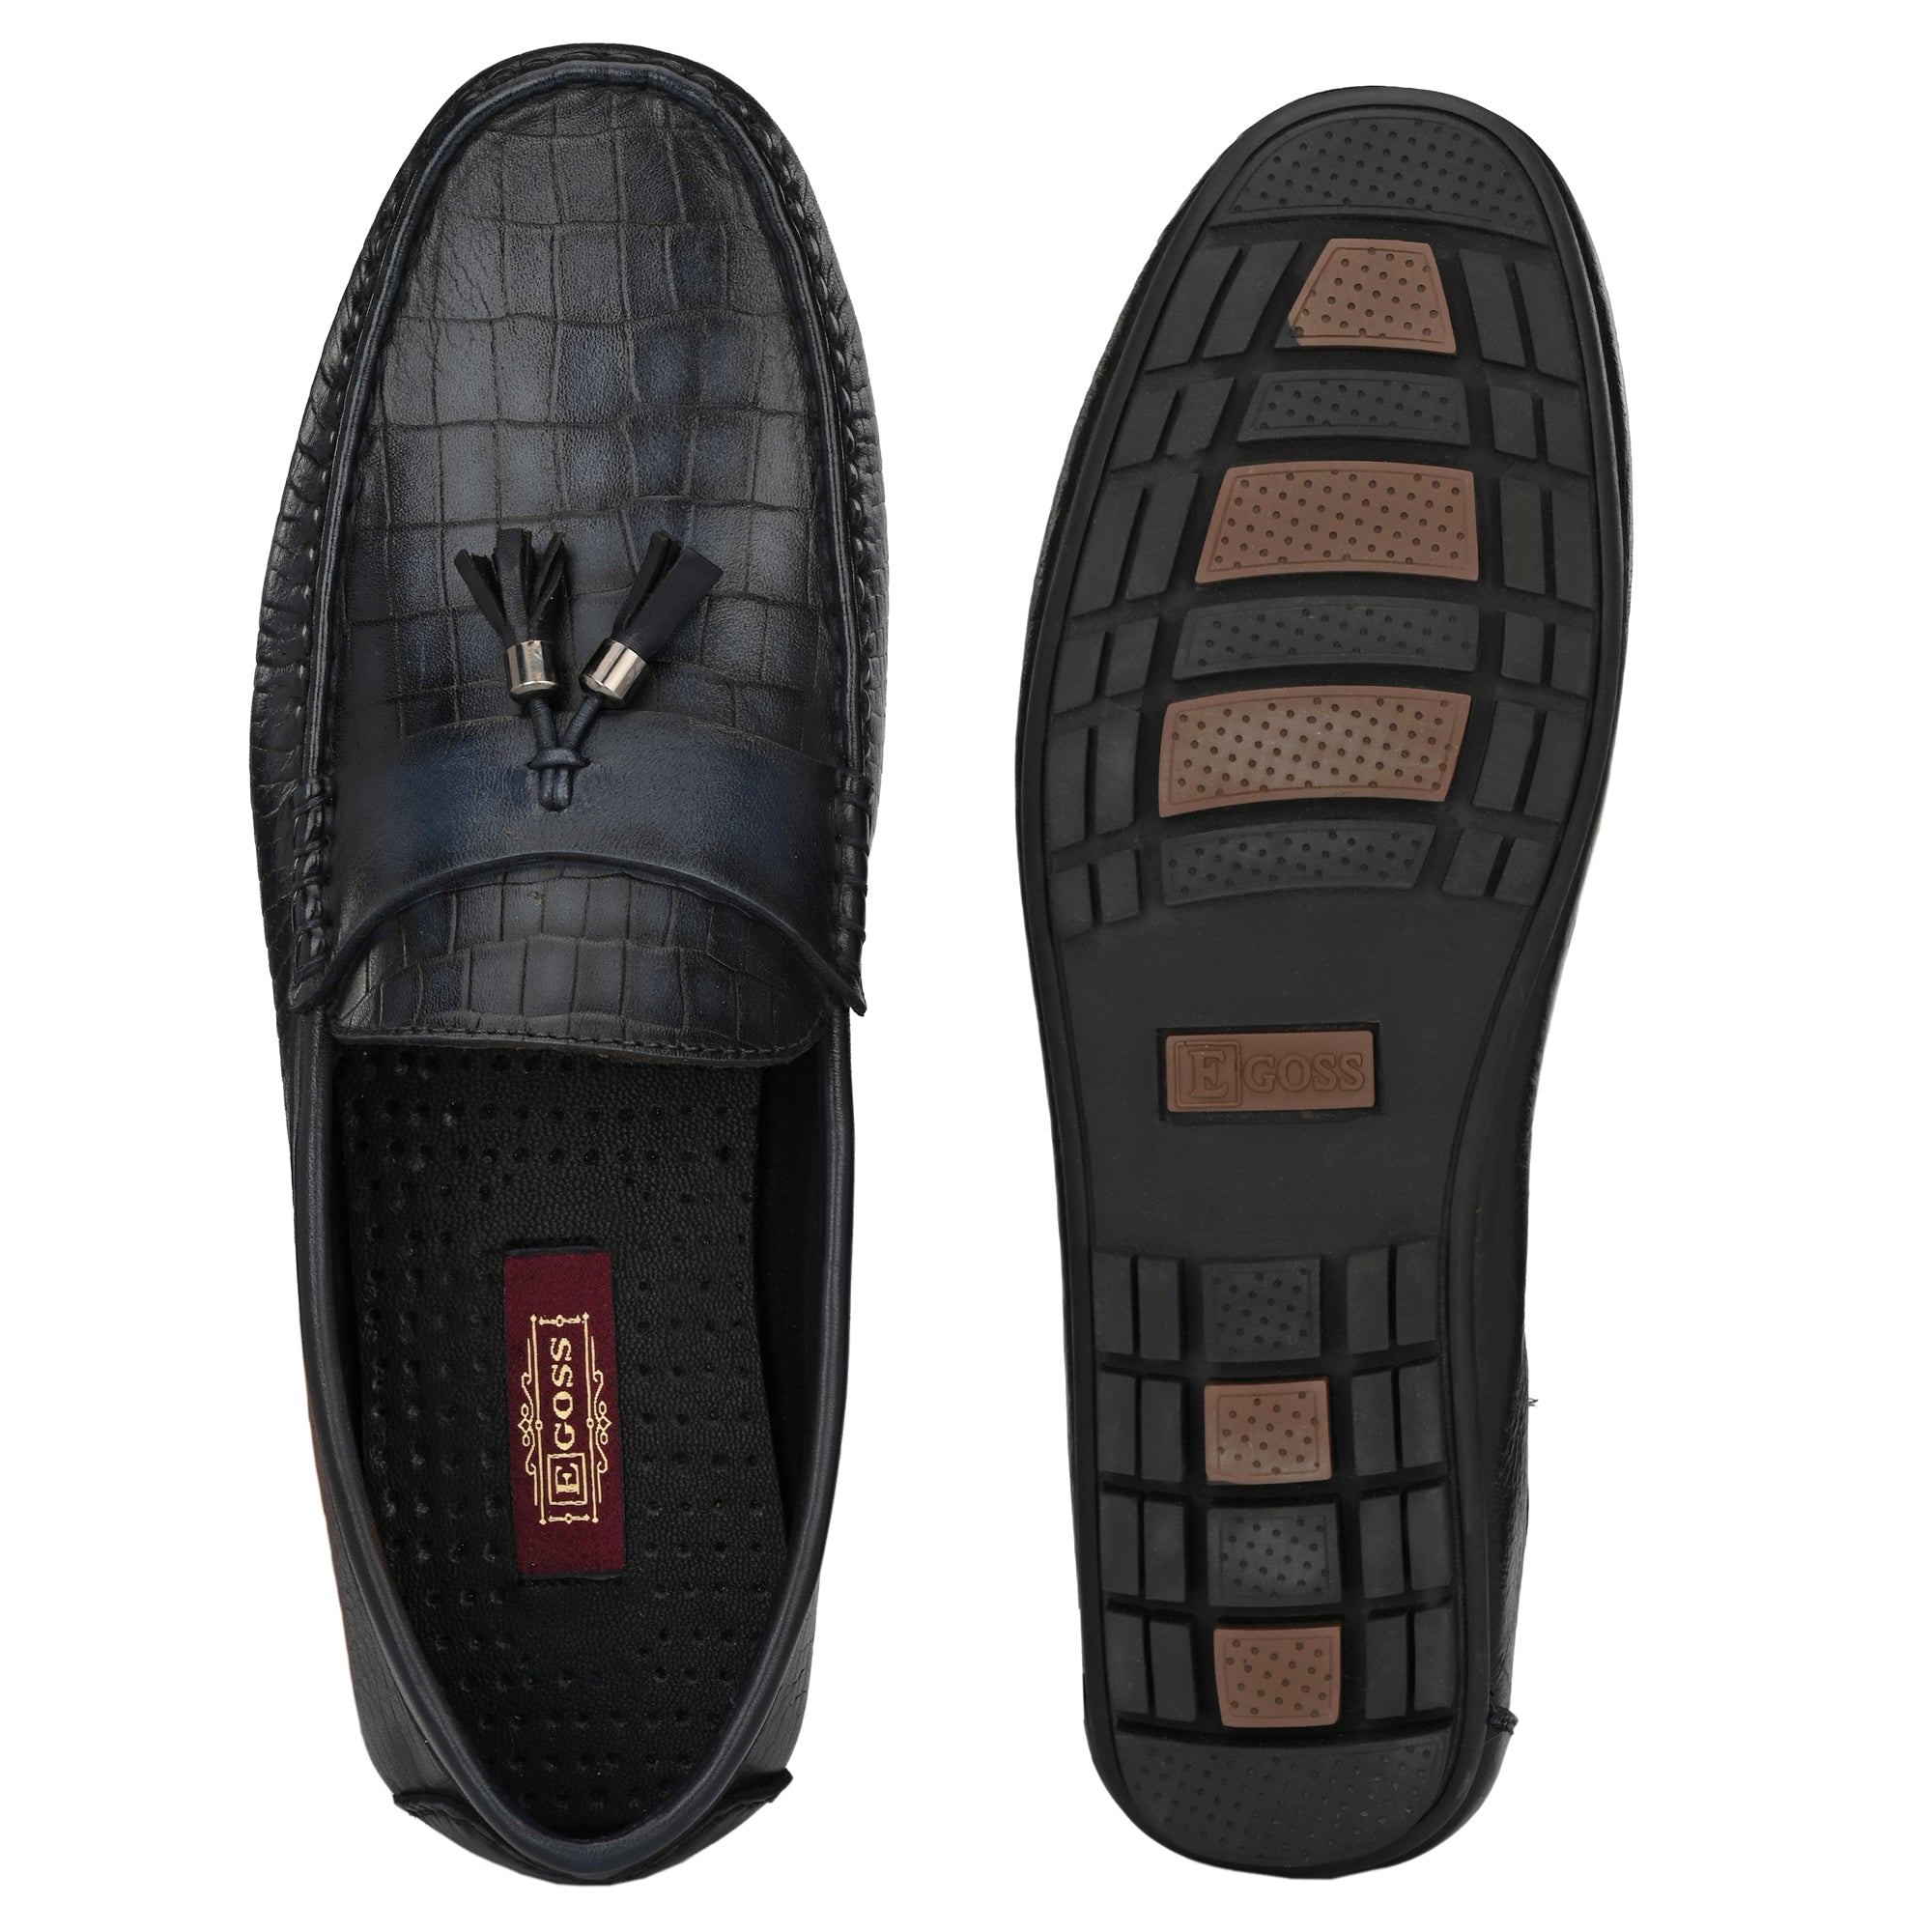 Egoss Tassel Formal Leather Loafers Shoes For Men